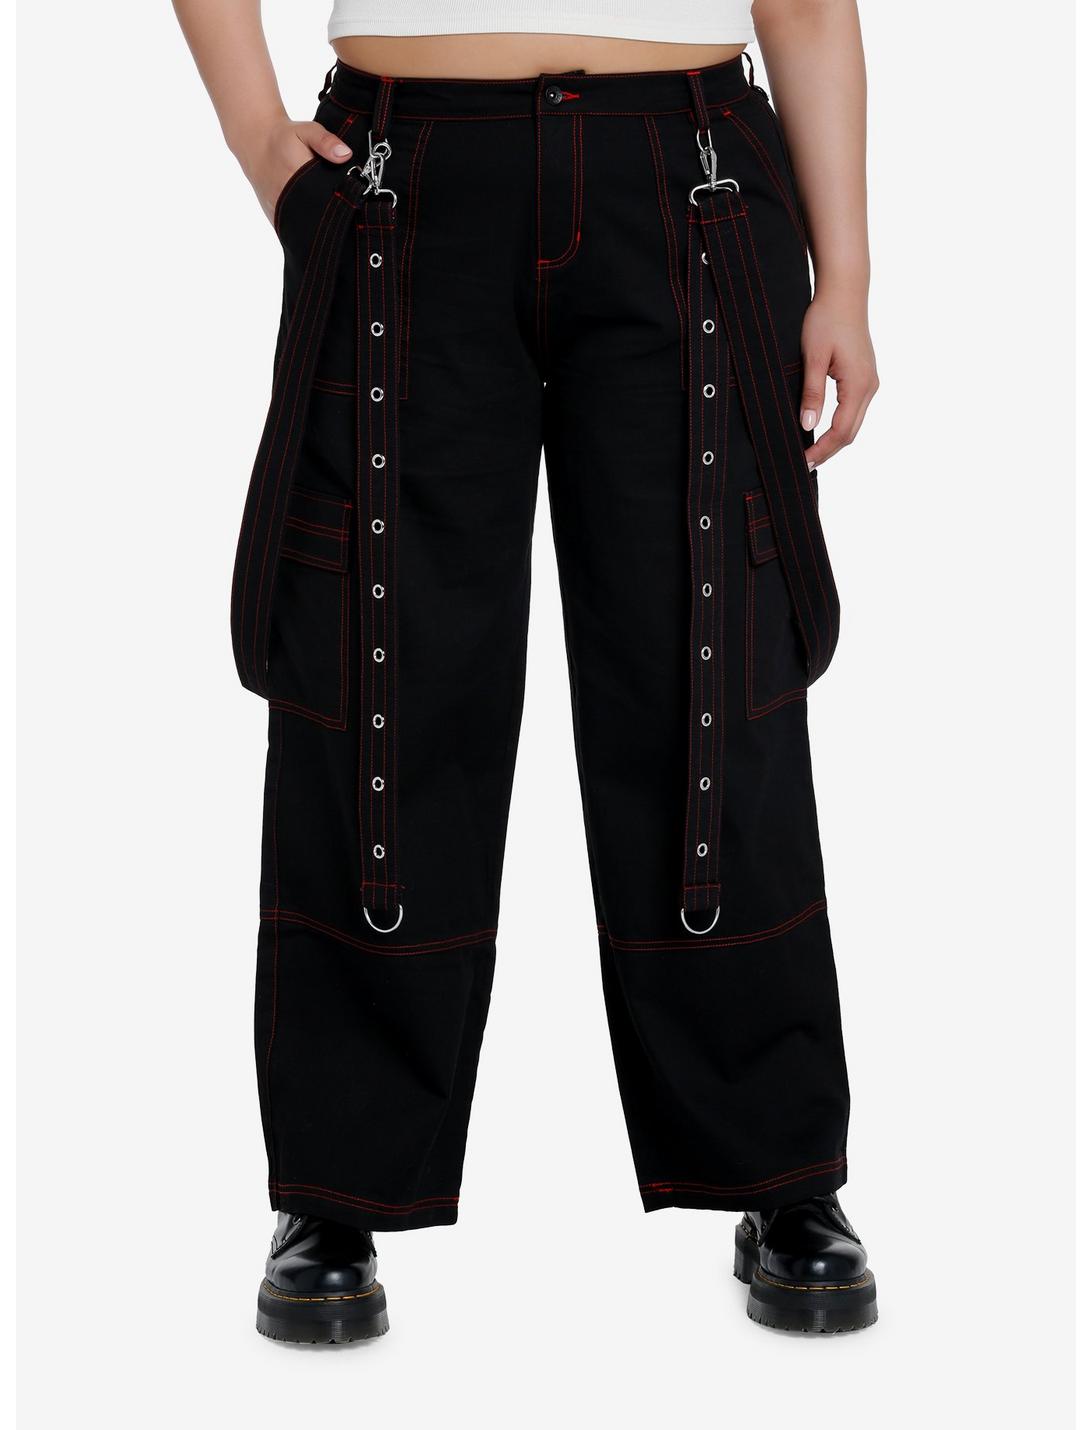 Red Stitch Black Cargo Suspender Pants Plus Size, BLACK  RED, hi-res